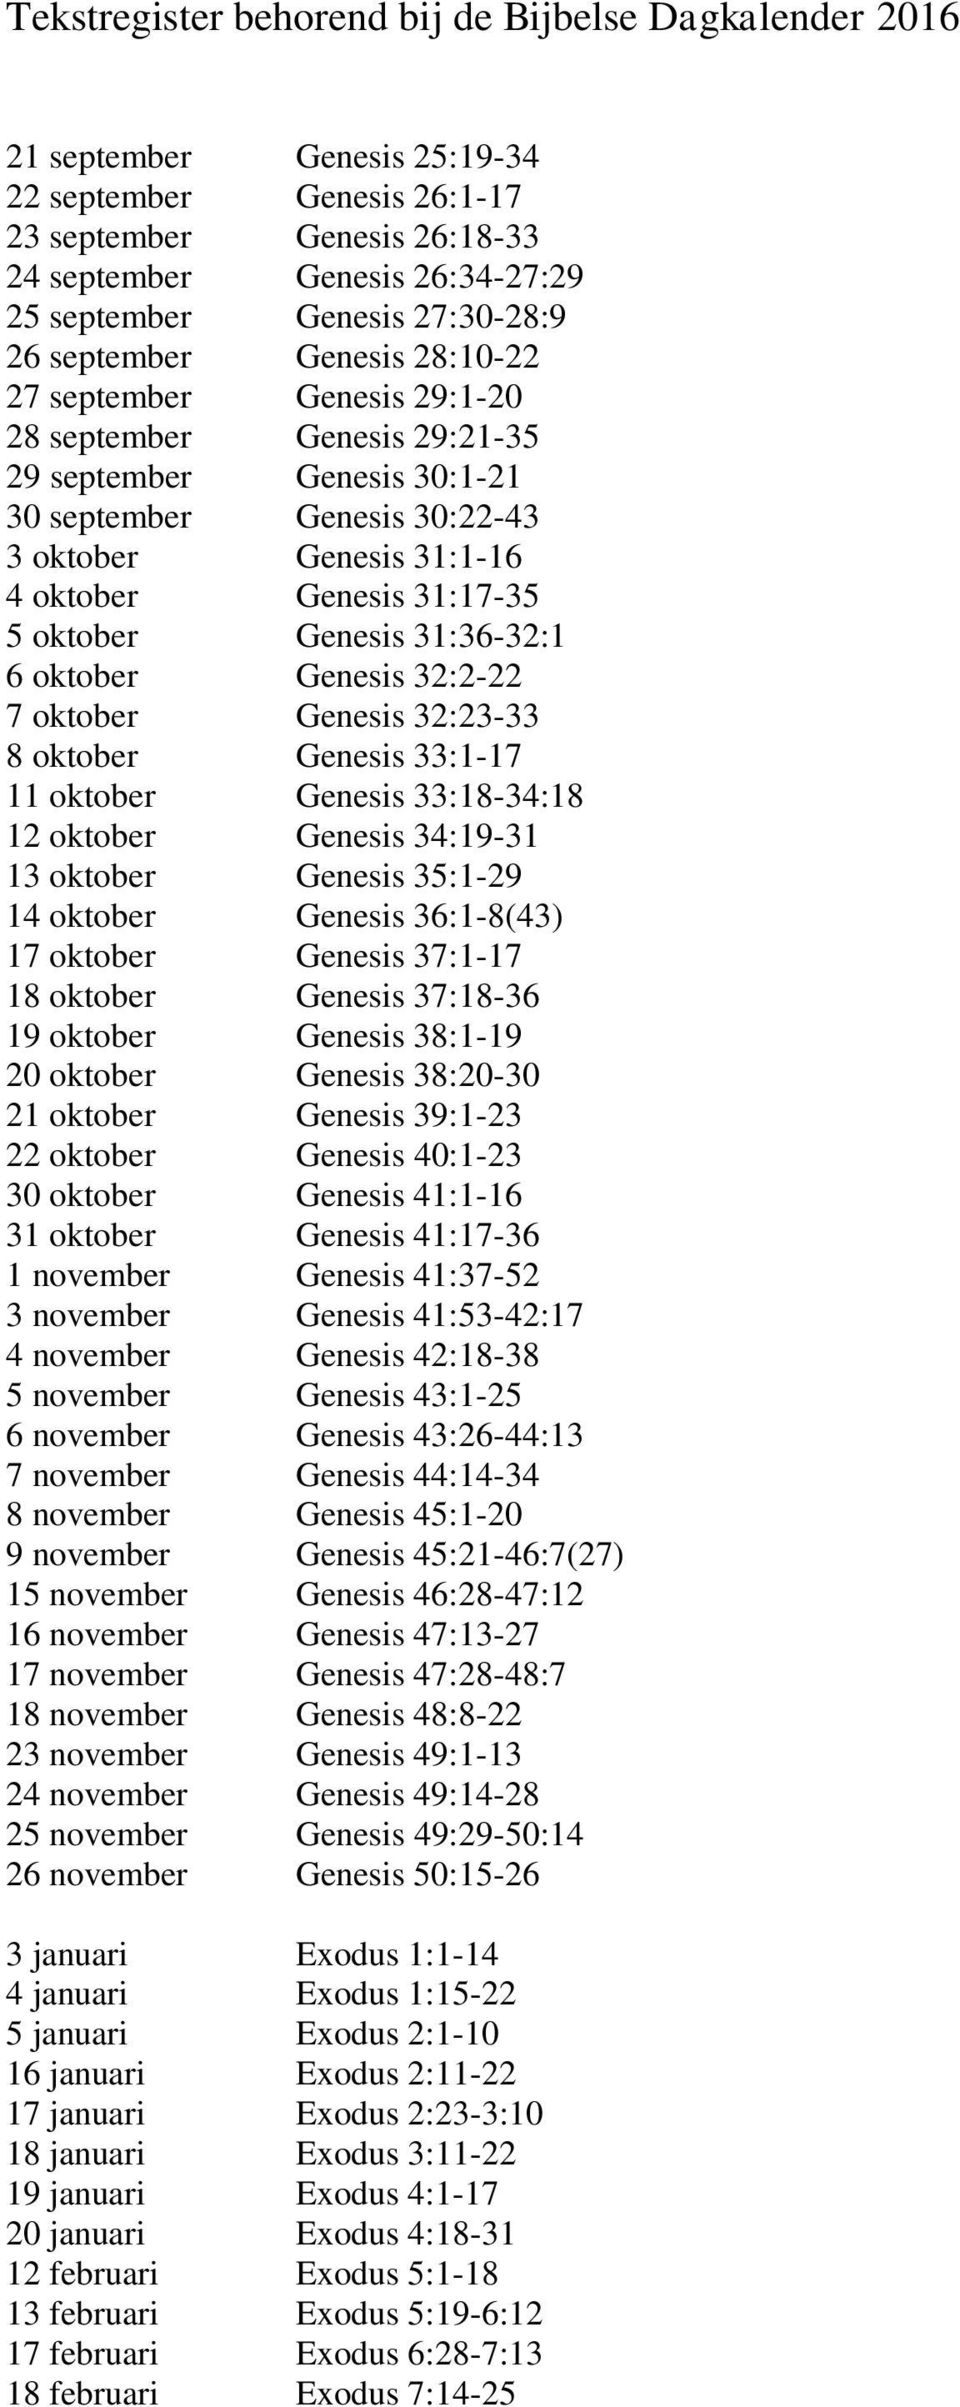 Genesis 31:17-35 5 oktober Genesis 31:36-32:1 6 oktober Genesis 32:2-22 7 oktober Genesis 32:23-33 8 oktober Genesis 33:1-17 11 oktober Genesis 33:18-34:18 12 oktober Genesis 34:19-31 13 oktober